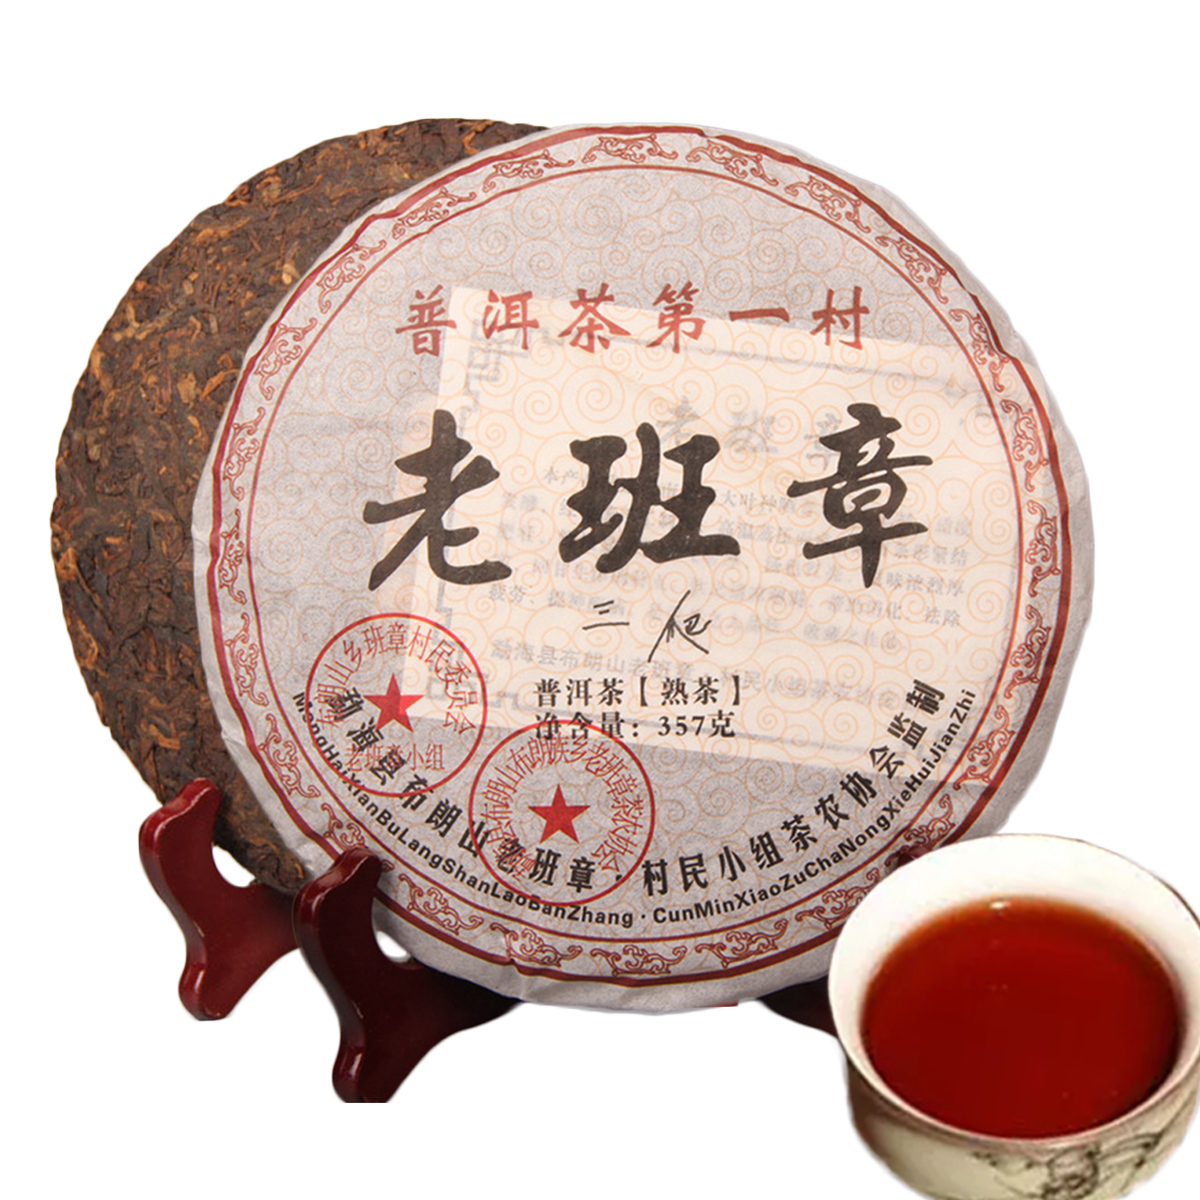 

357g Ripe Puer Tea Yunnan Old Banzhang Classic Puer Tea Organic Pu'er Old Tree Cooked Pu er Natural Pu erh Black Puerh Tea Cake